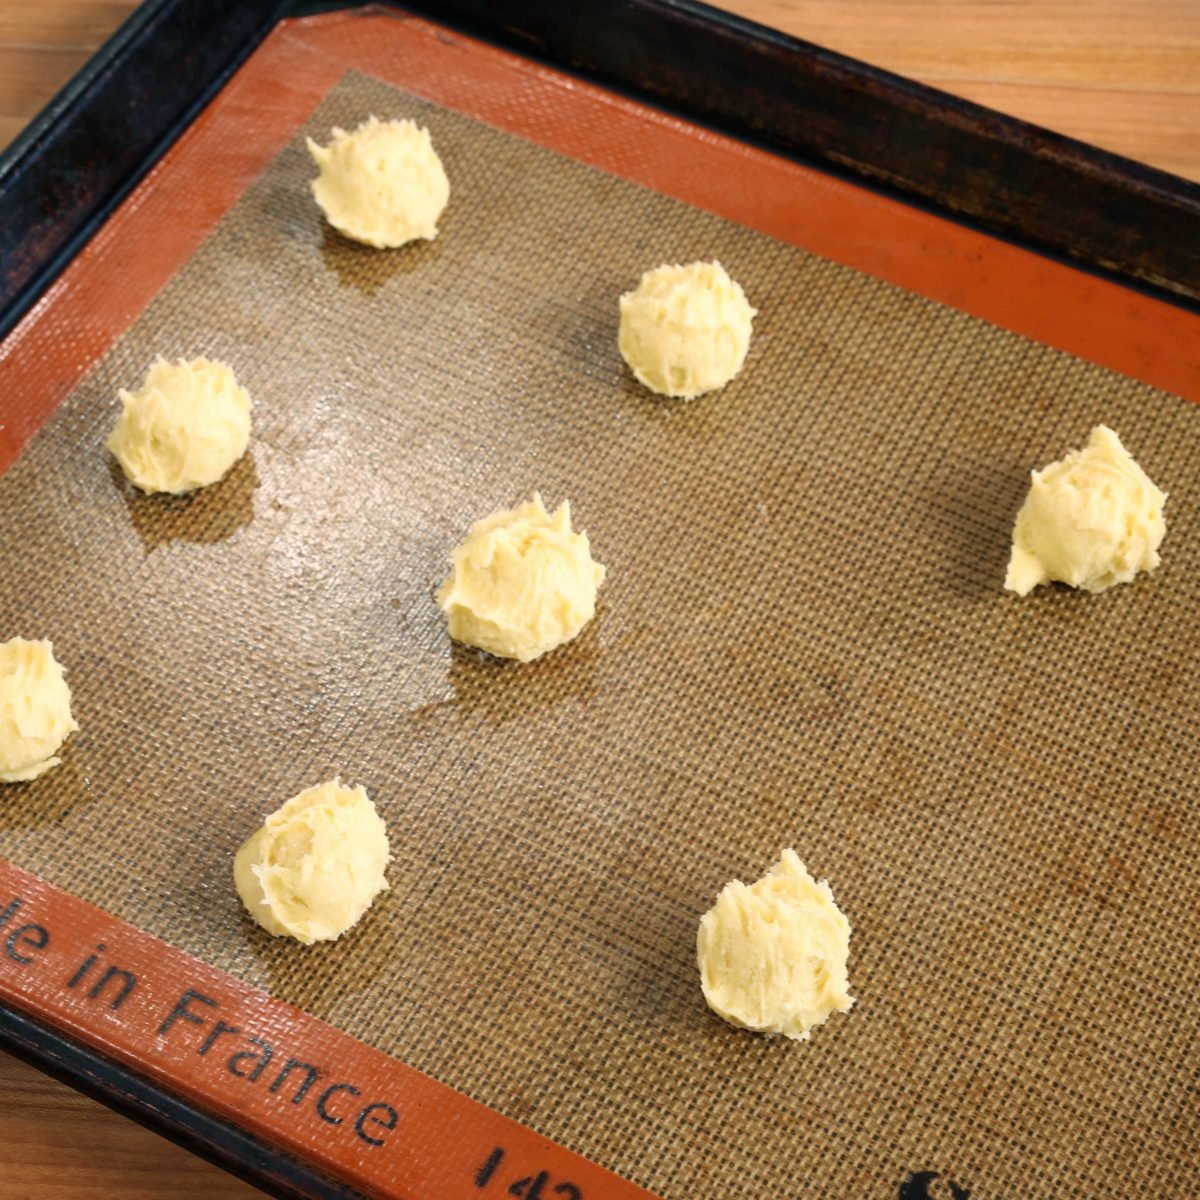 8 balls of cookie dough on a baking sheet.